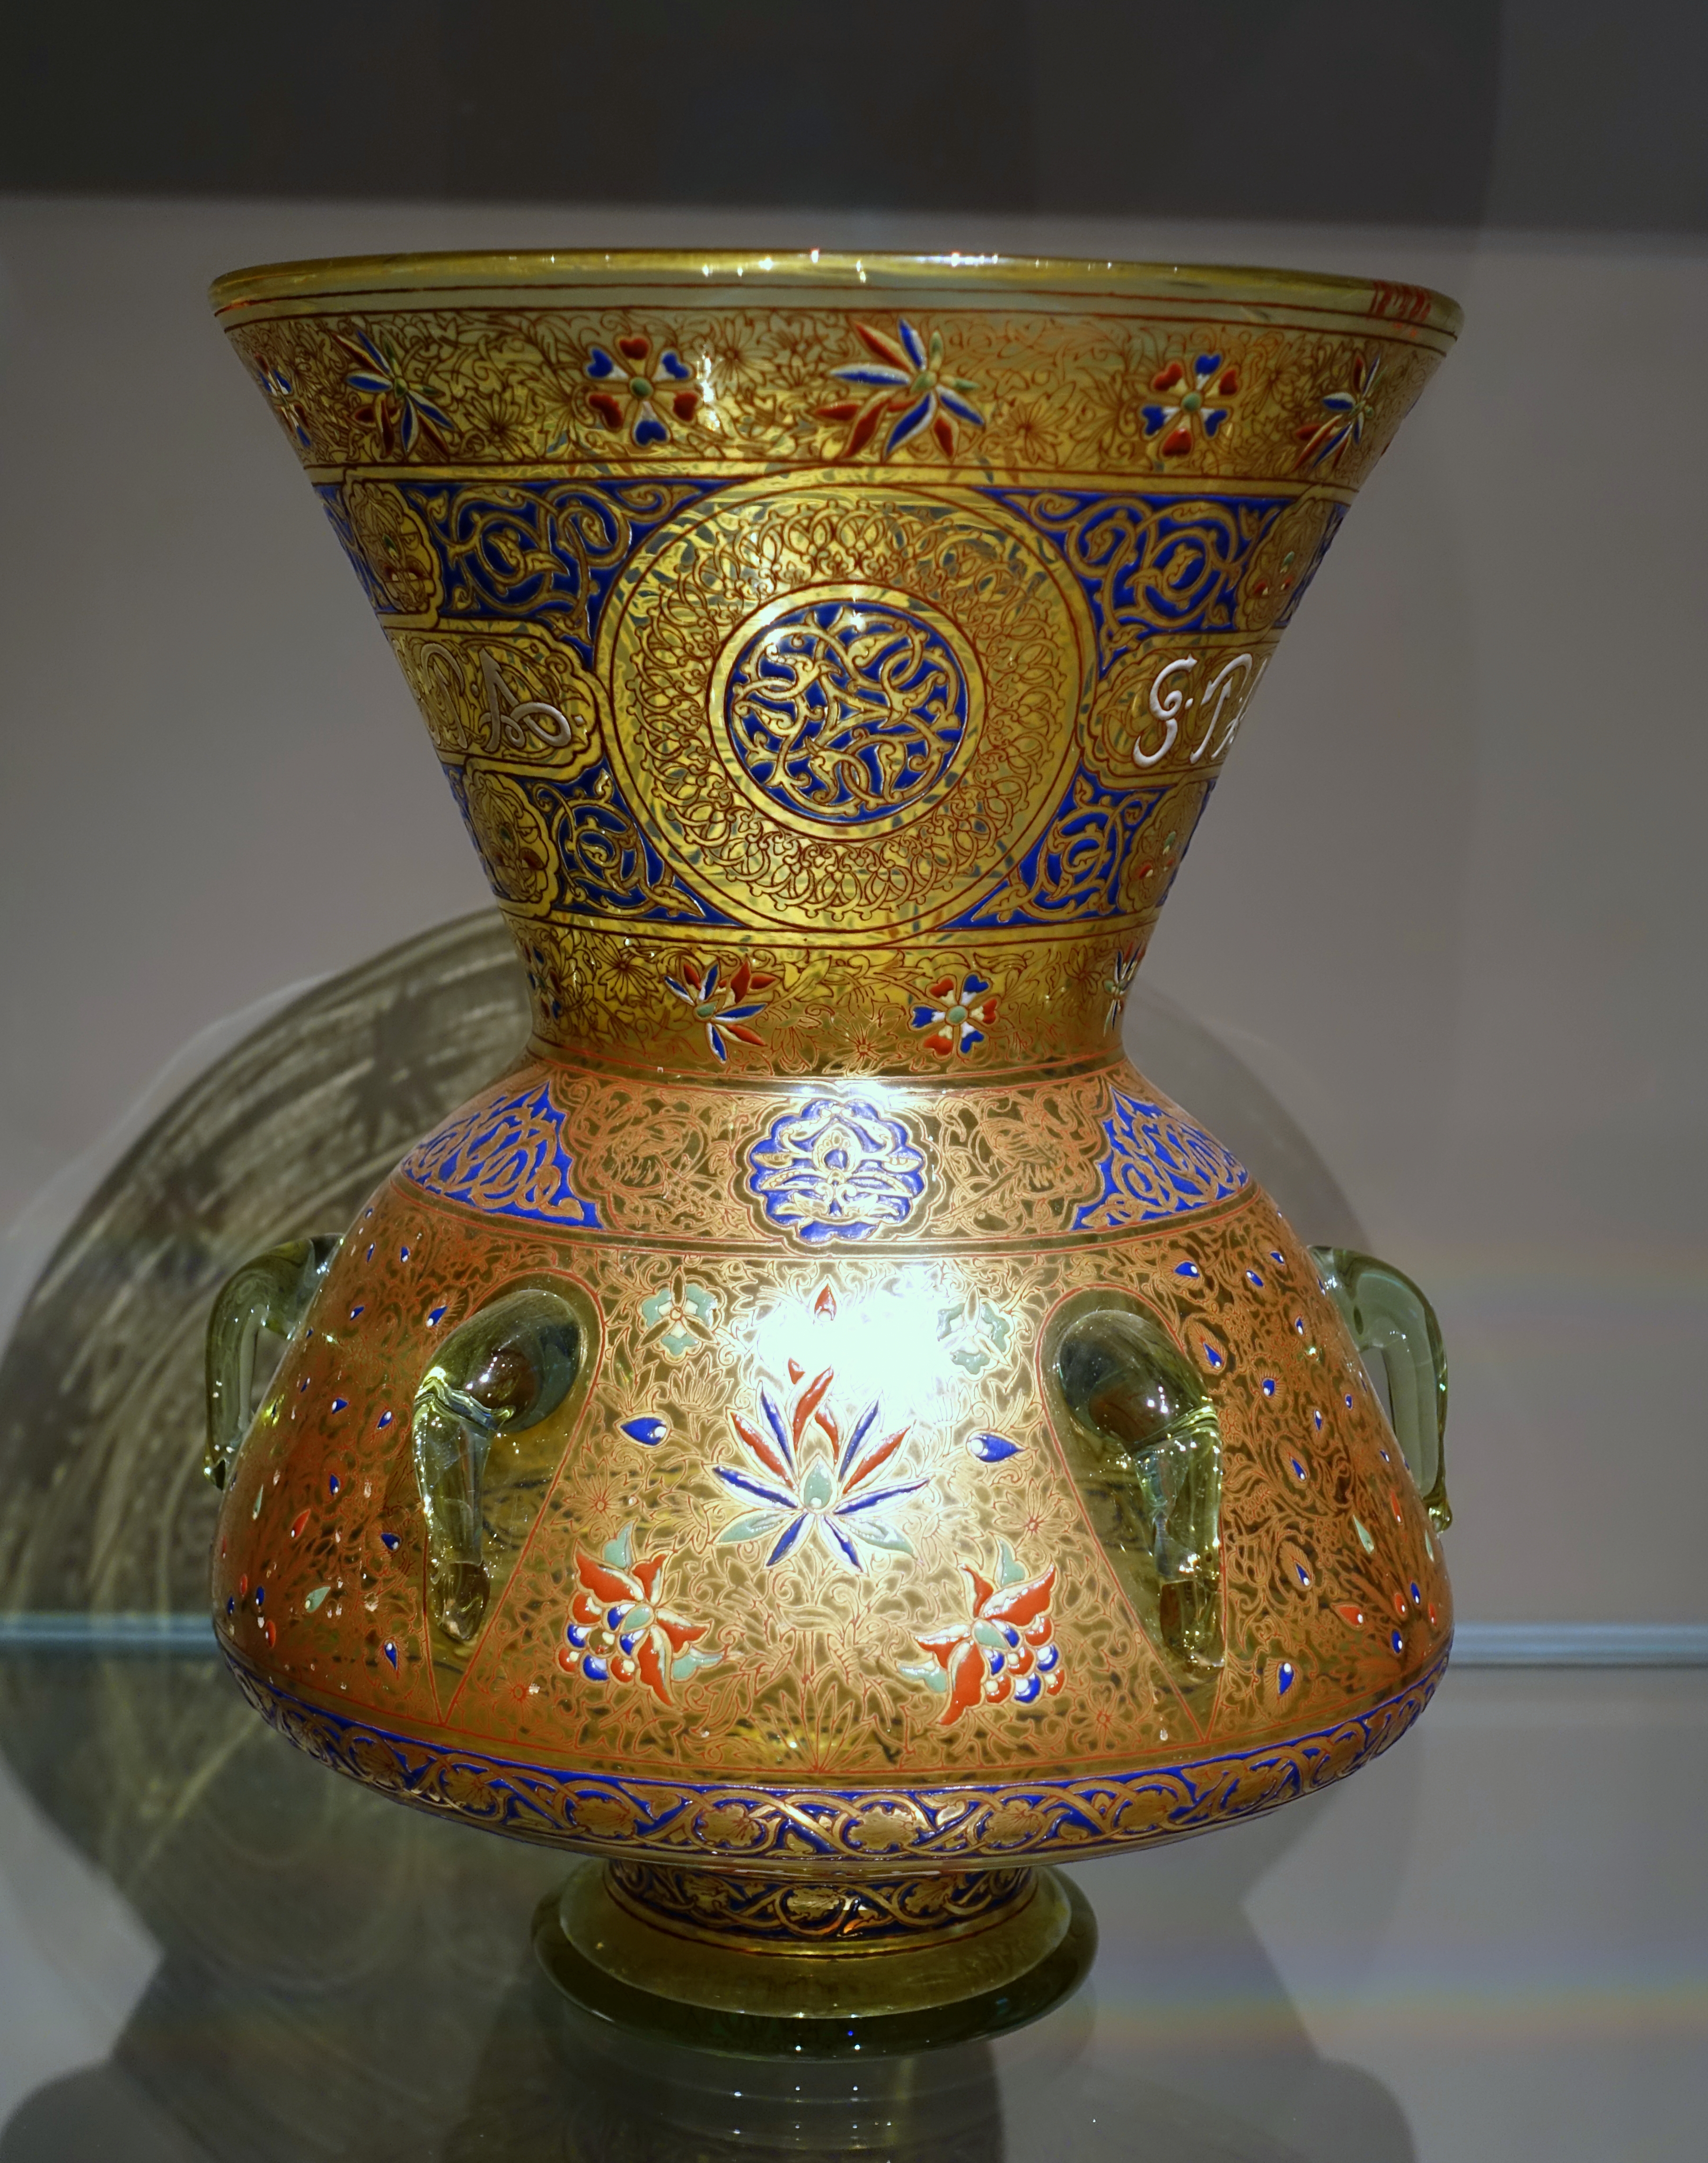 File:Mosque lamp, by Phillipe Joseph Brocard, 1883-1884, glass - Wadsworth Atheneum - Hartford, CT - DSC05556.jpg - Wikimedia Commons